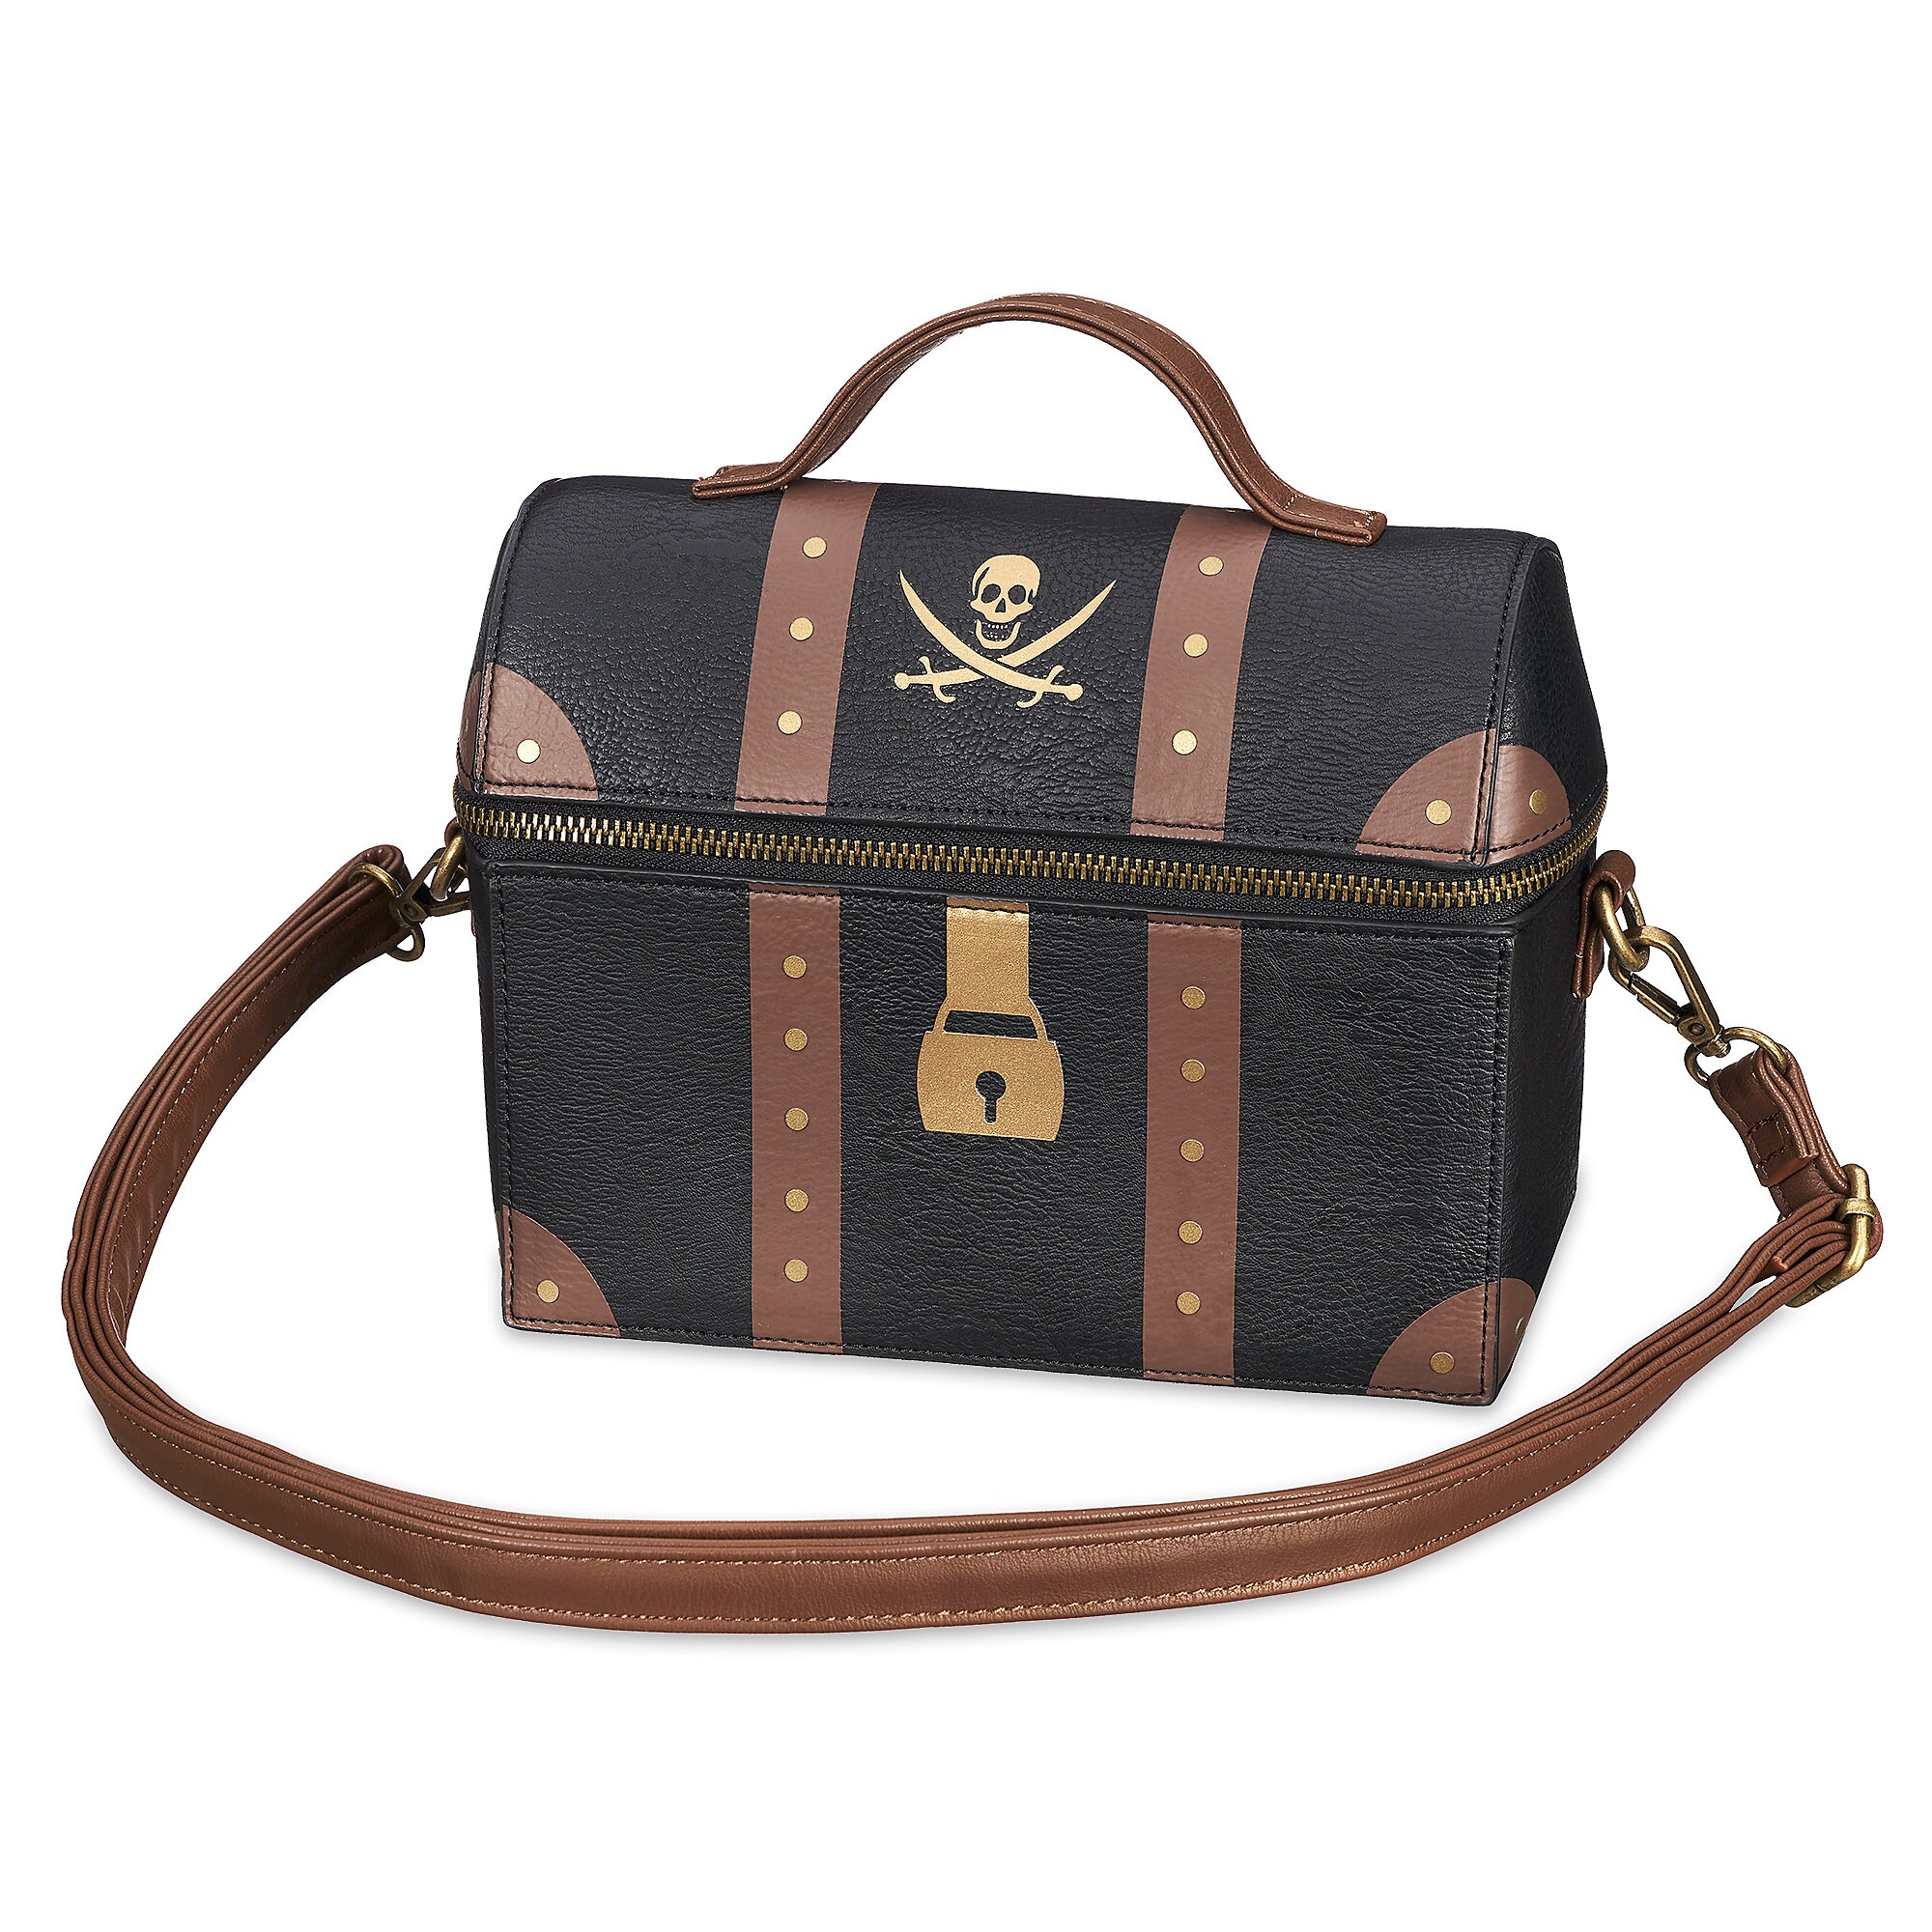 Redd Treasure Chest Handbag - Pirates of the Caribbean